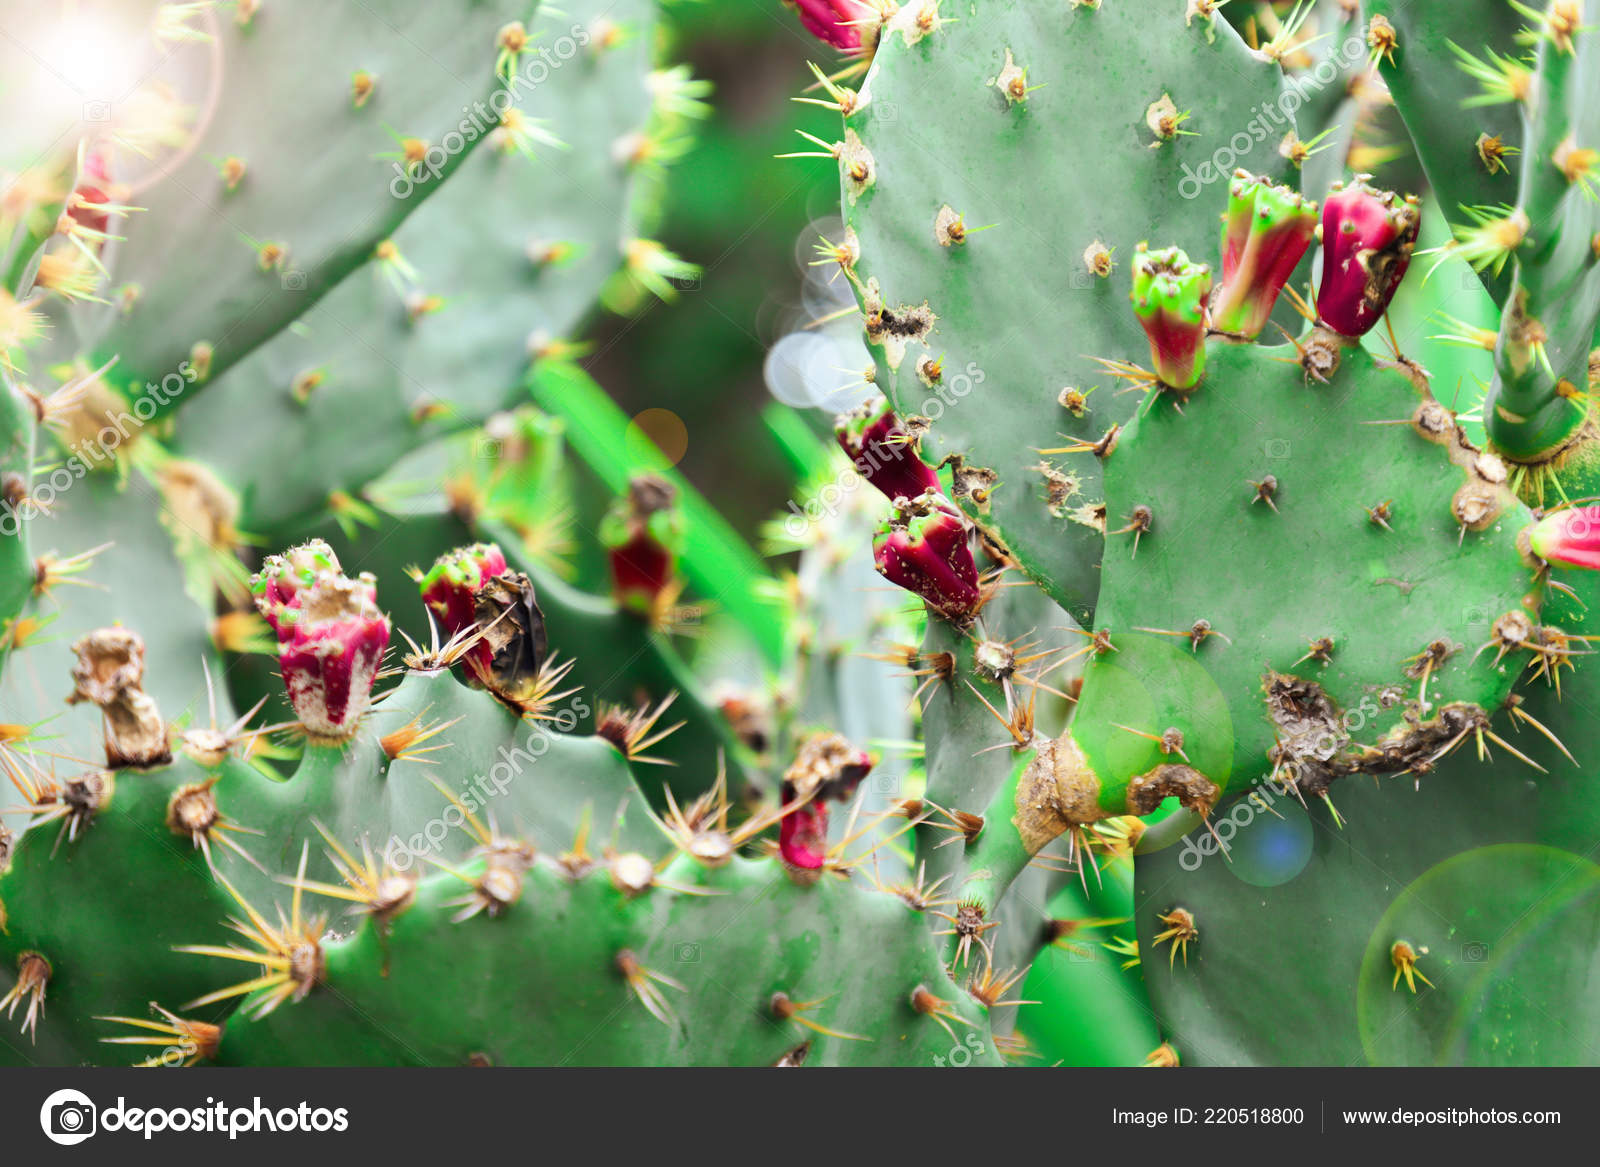 Prickly Pear Cactus Fruit Purple Color Cactus Spines Glare Sun Stock Photo C Svetlayatn1 Gmail Com 220518800